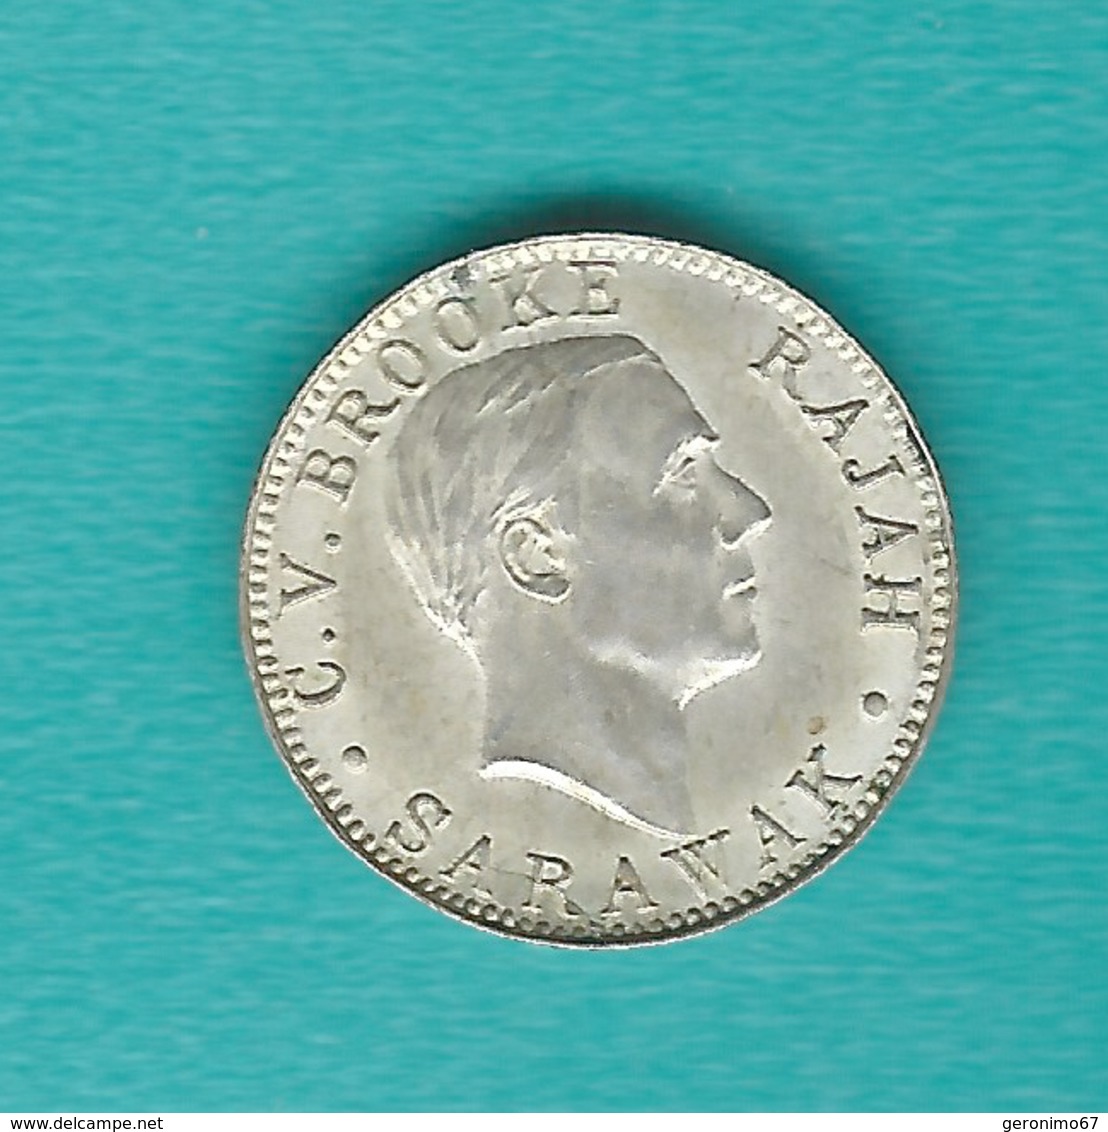 Sarawak - Rajah C V Brooke - 10 Cents - 1920 H - KM15 - Malaysie